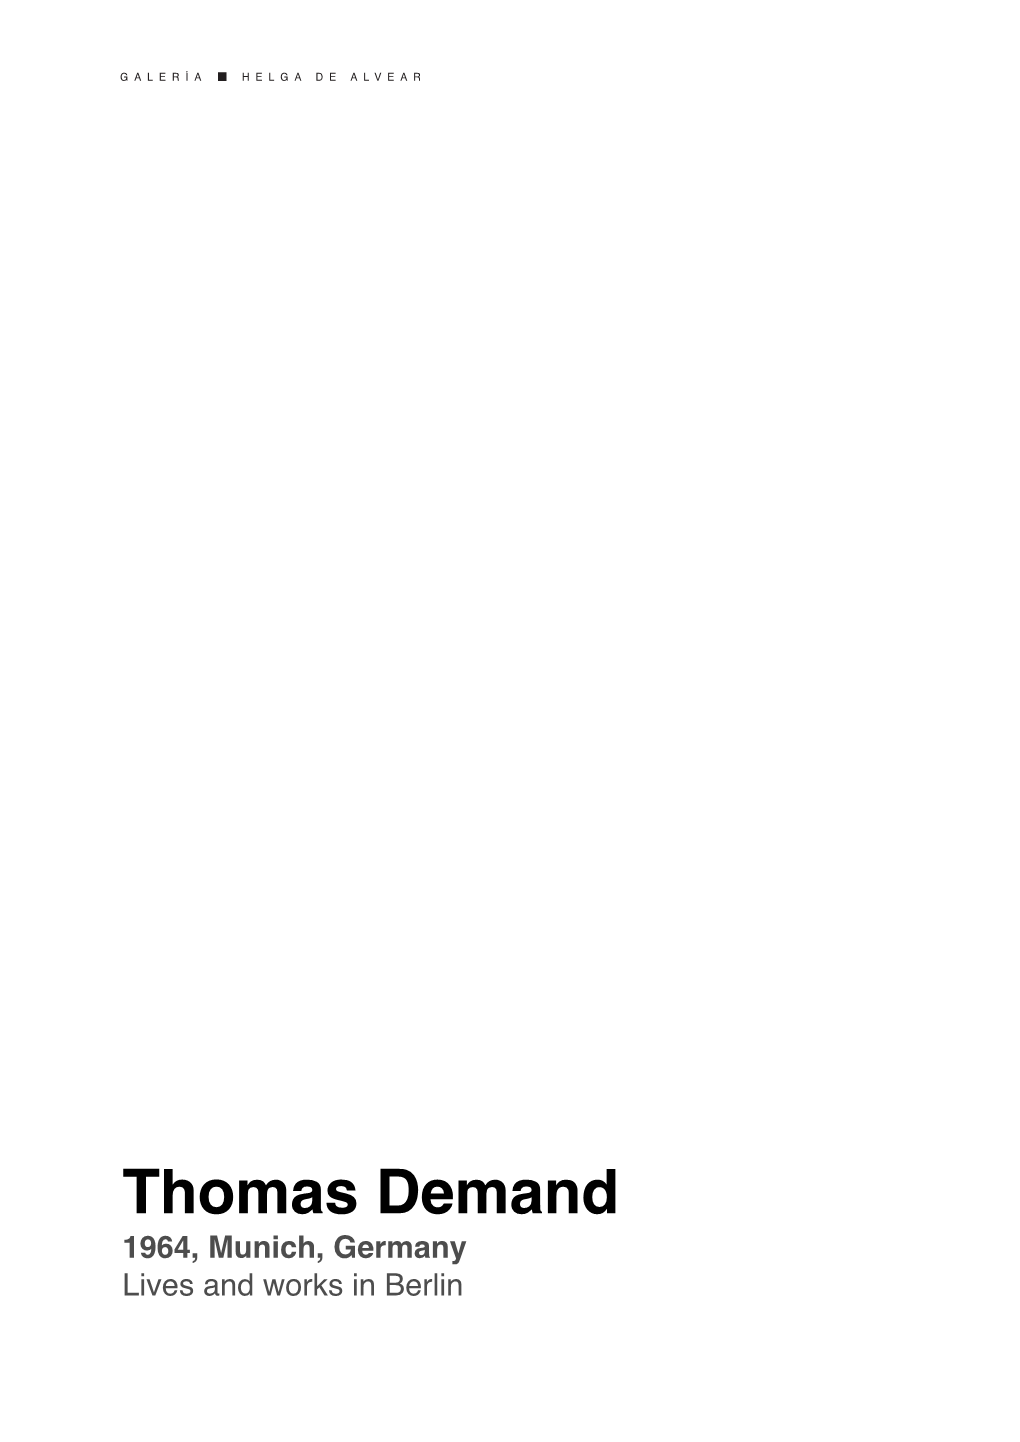 02 Cv Thomas Demand Eng